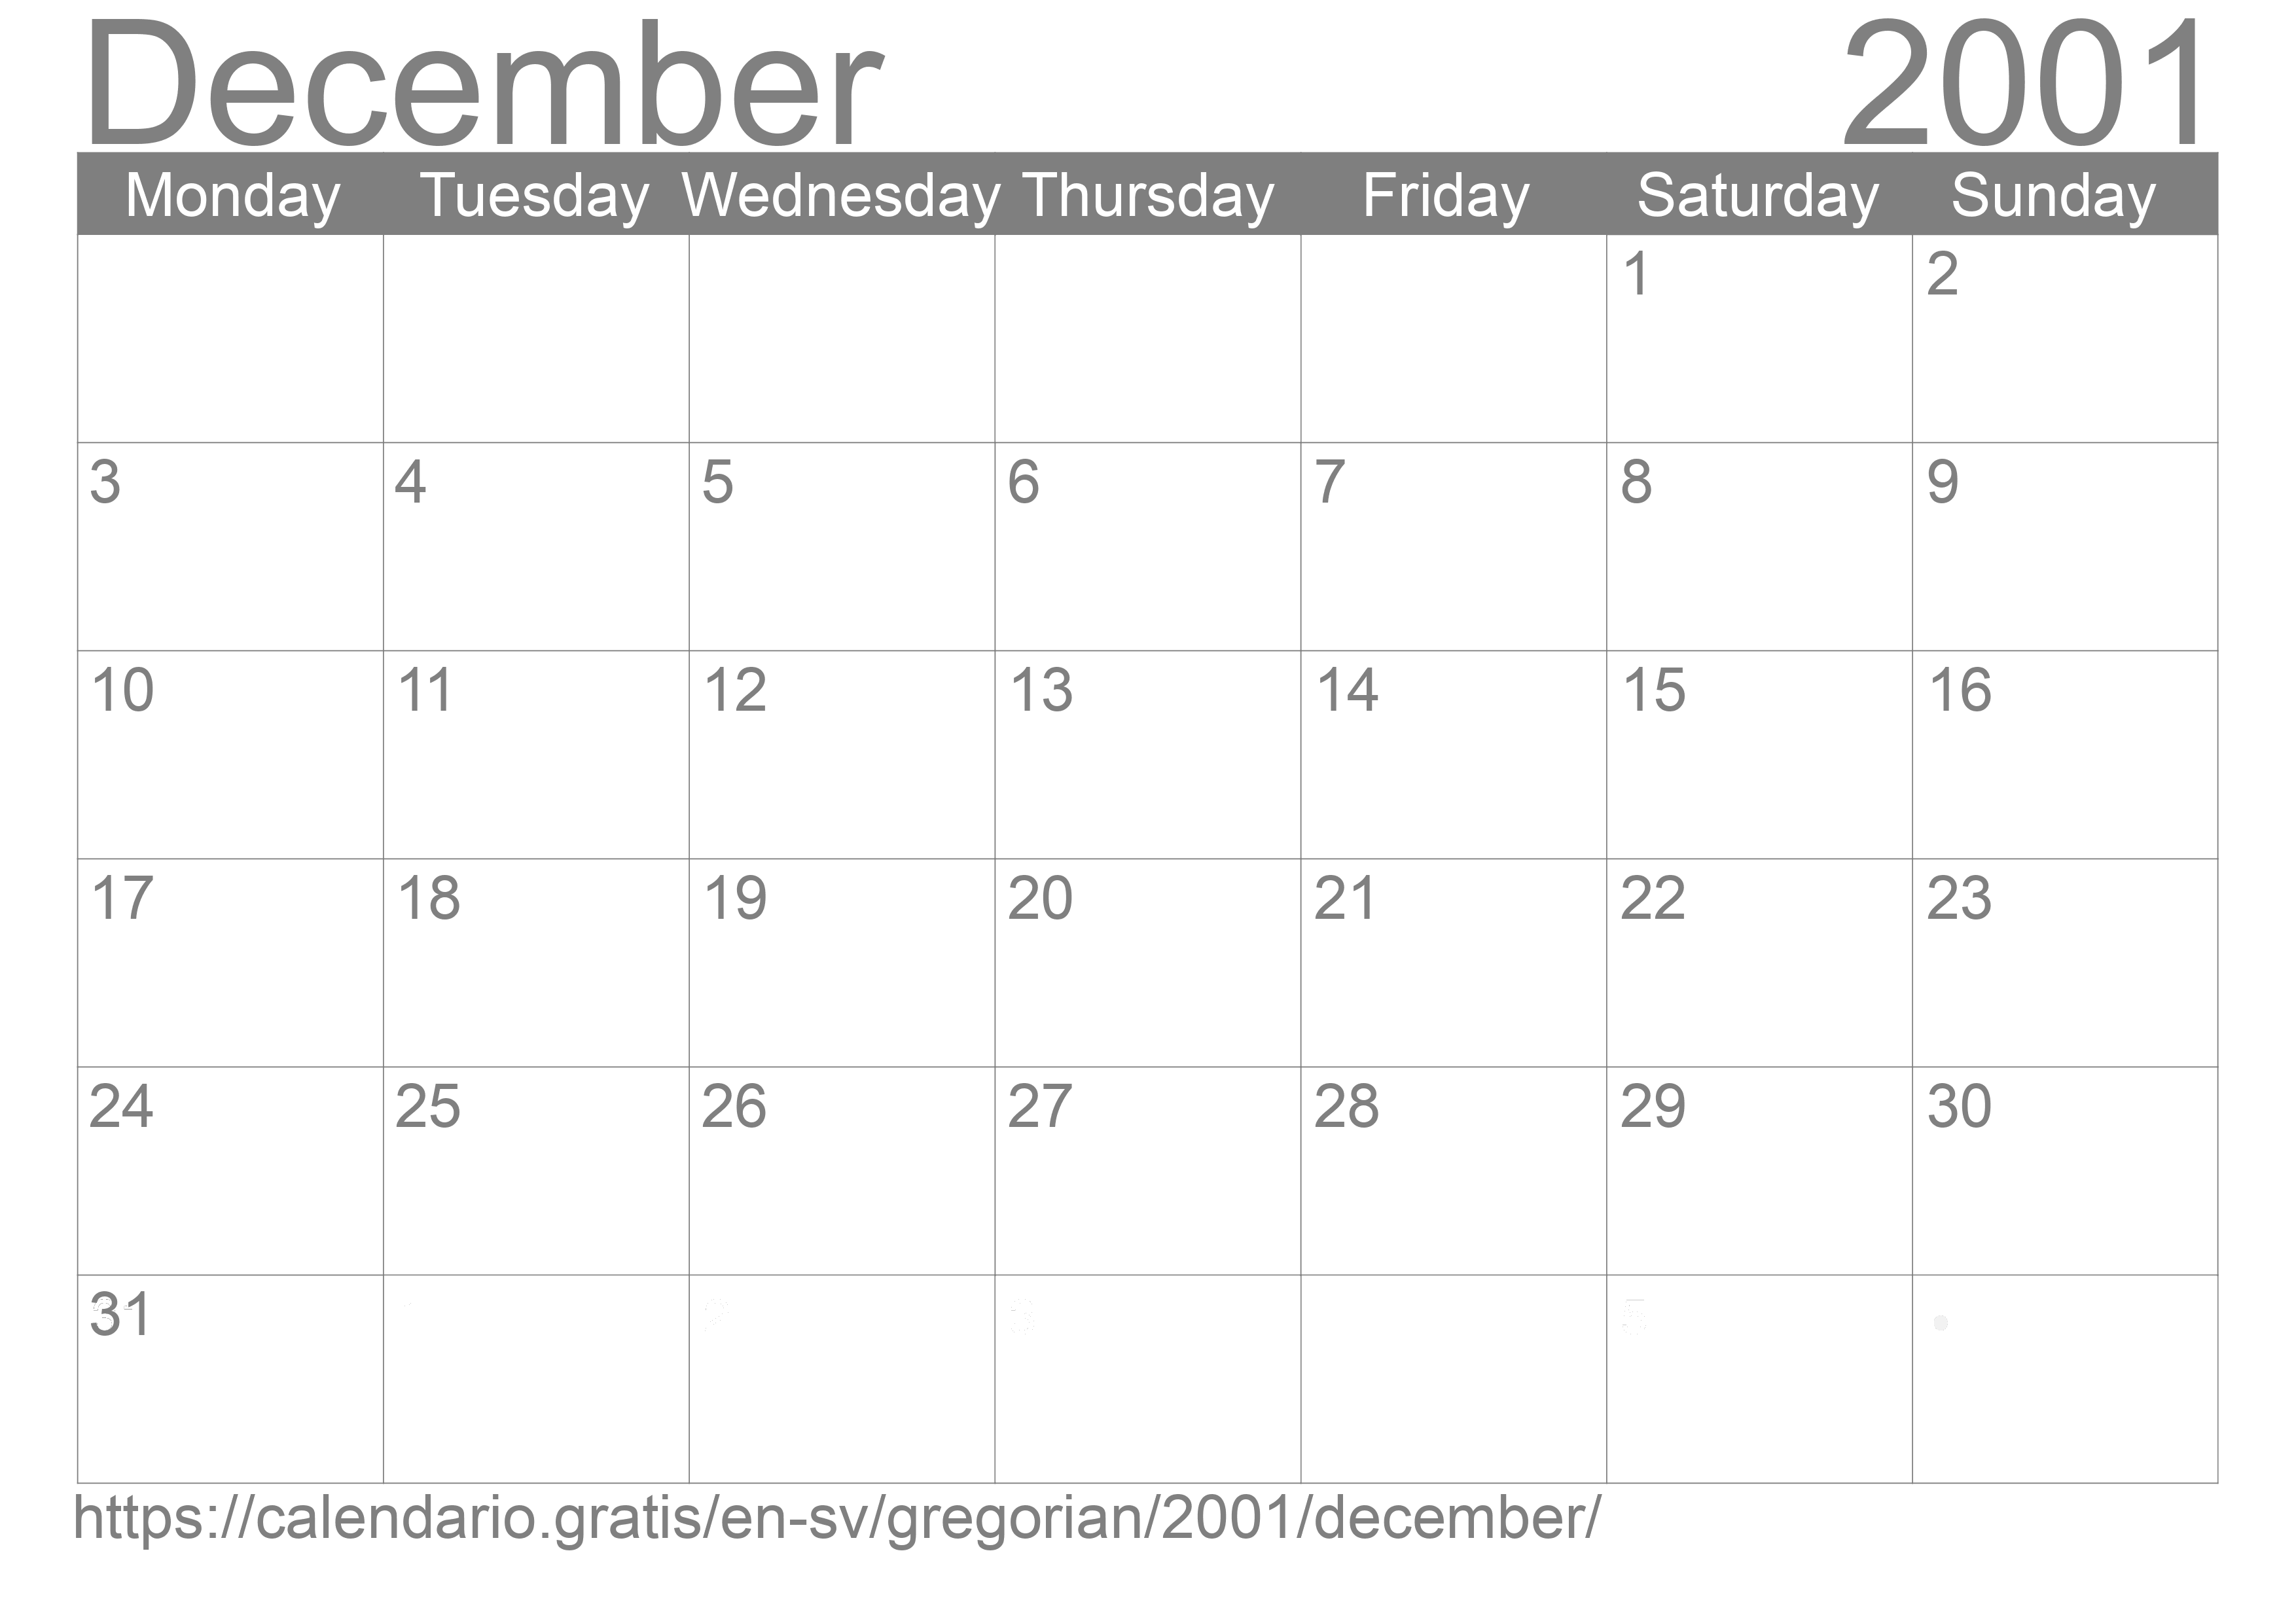 Calendar December 2001 to print